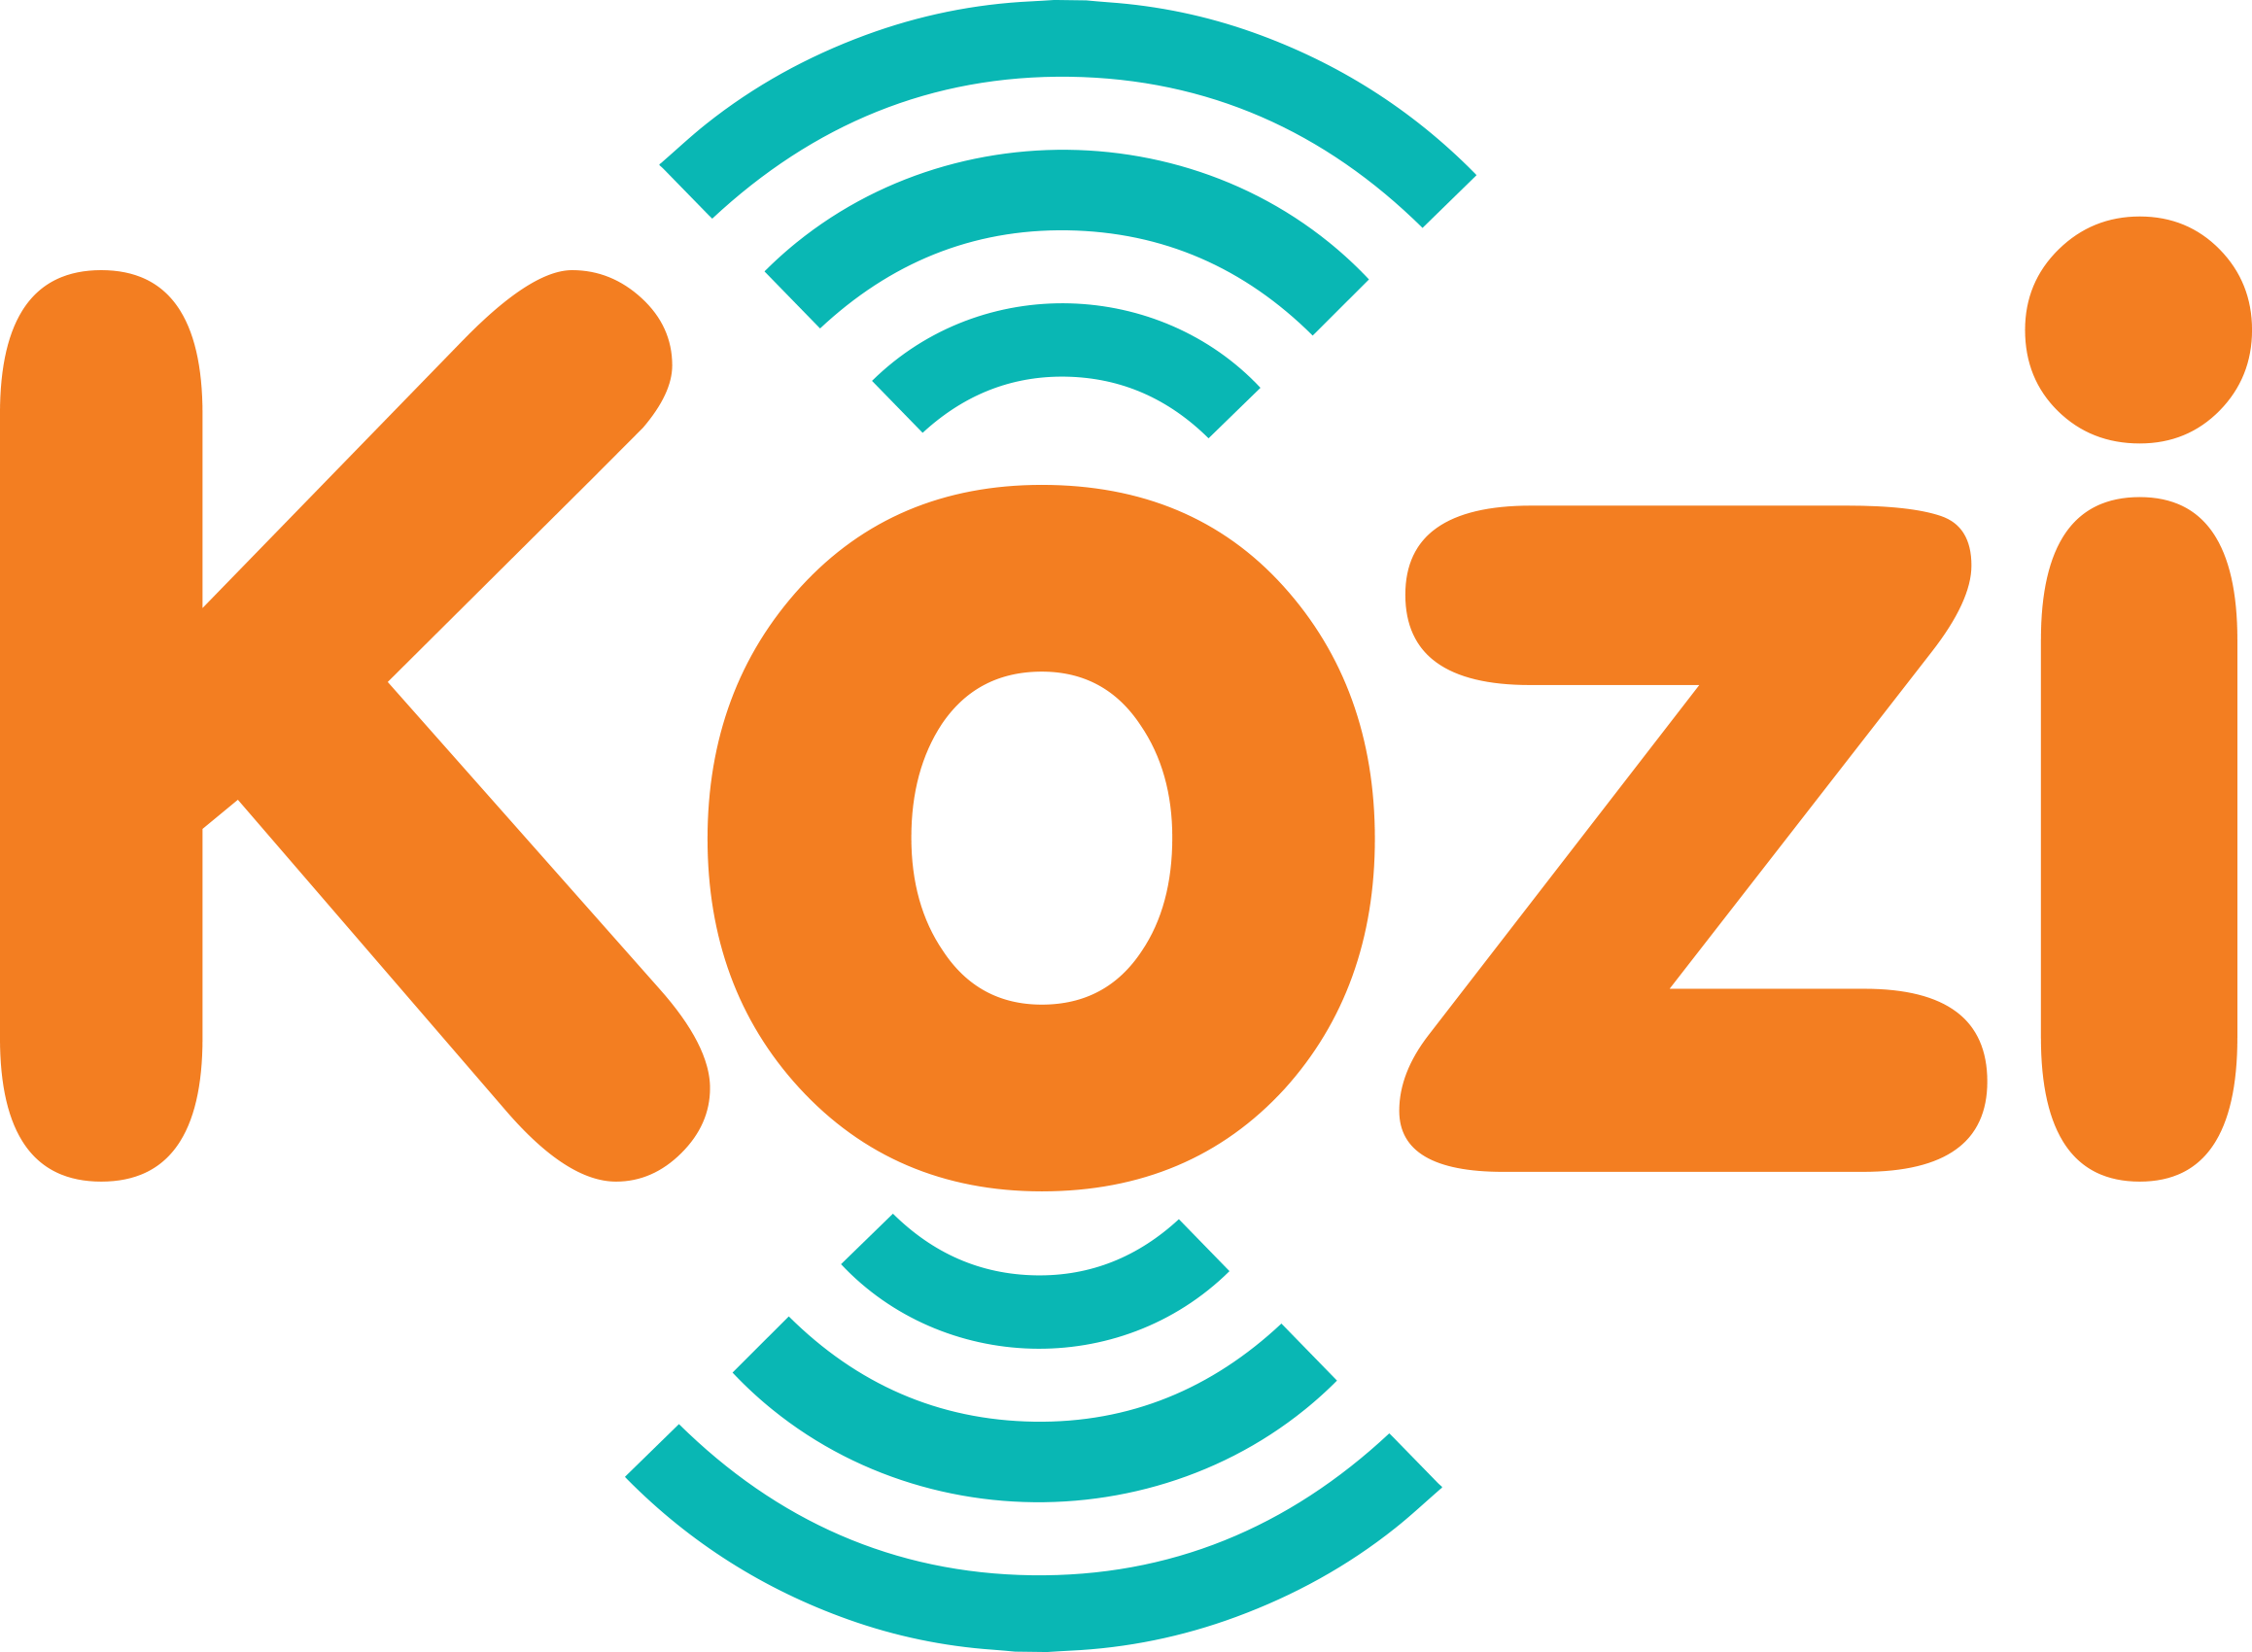 Kozi Connect